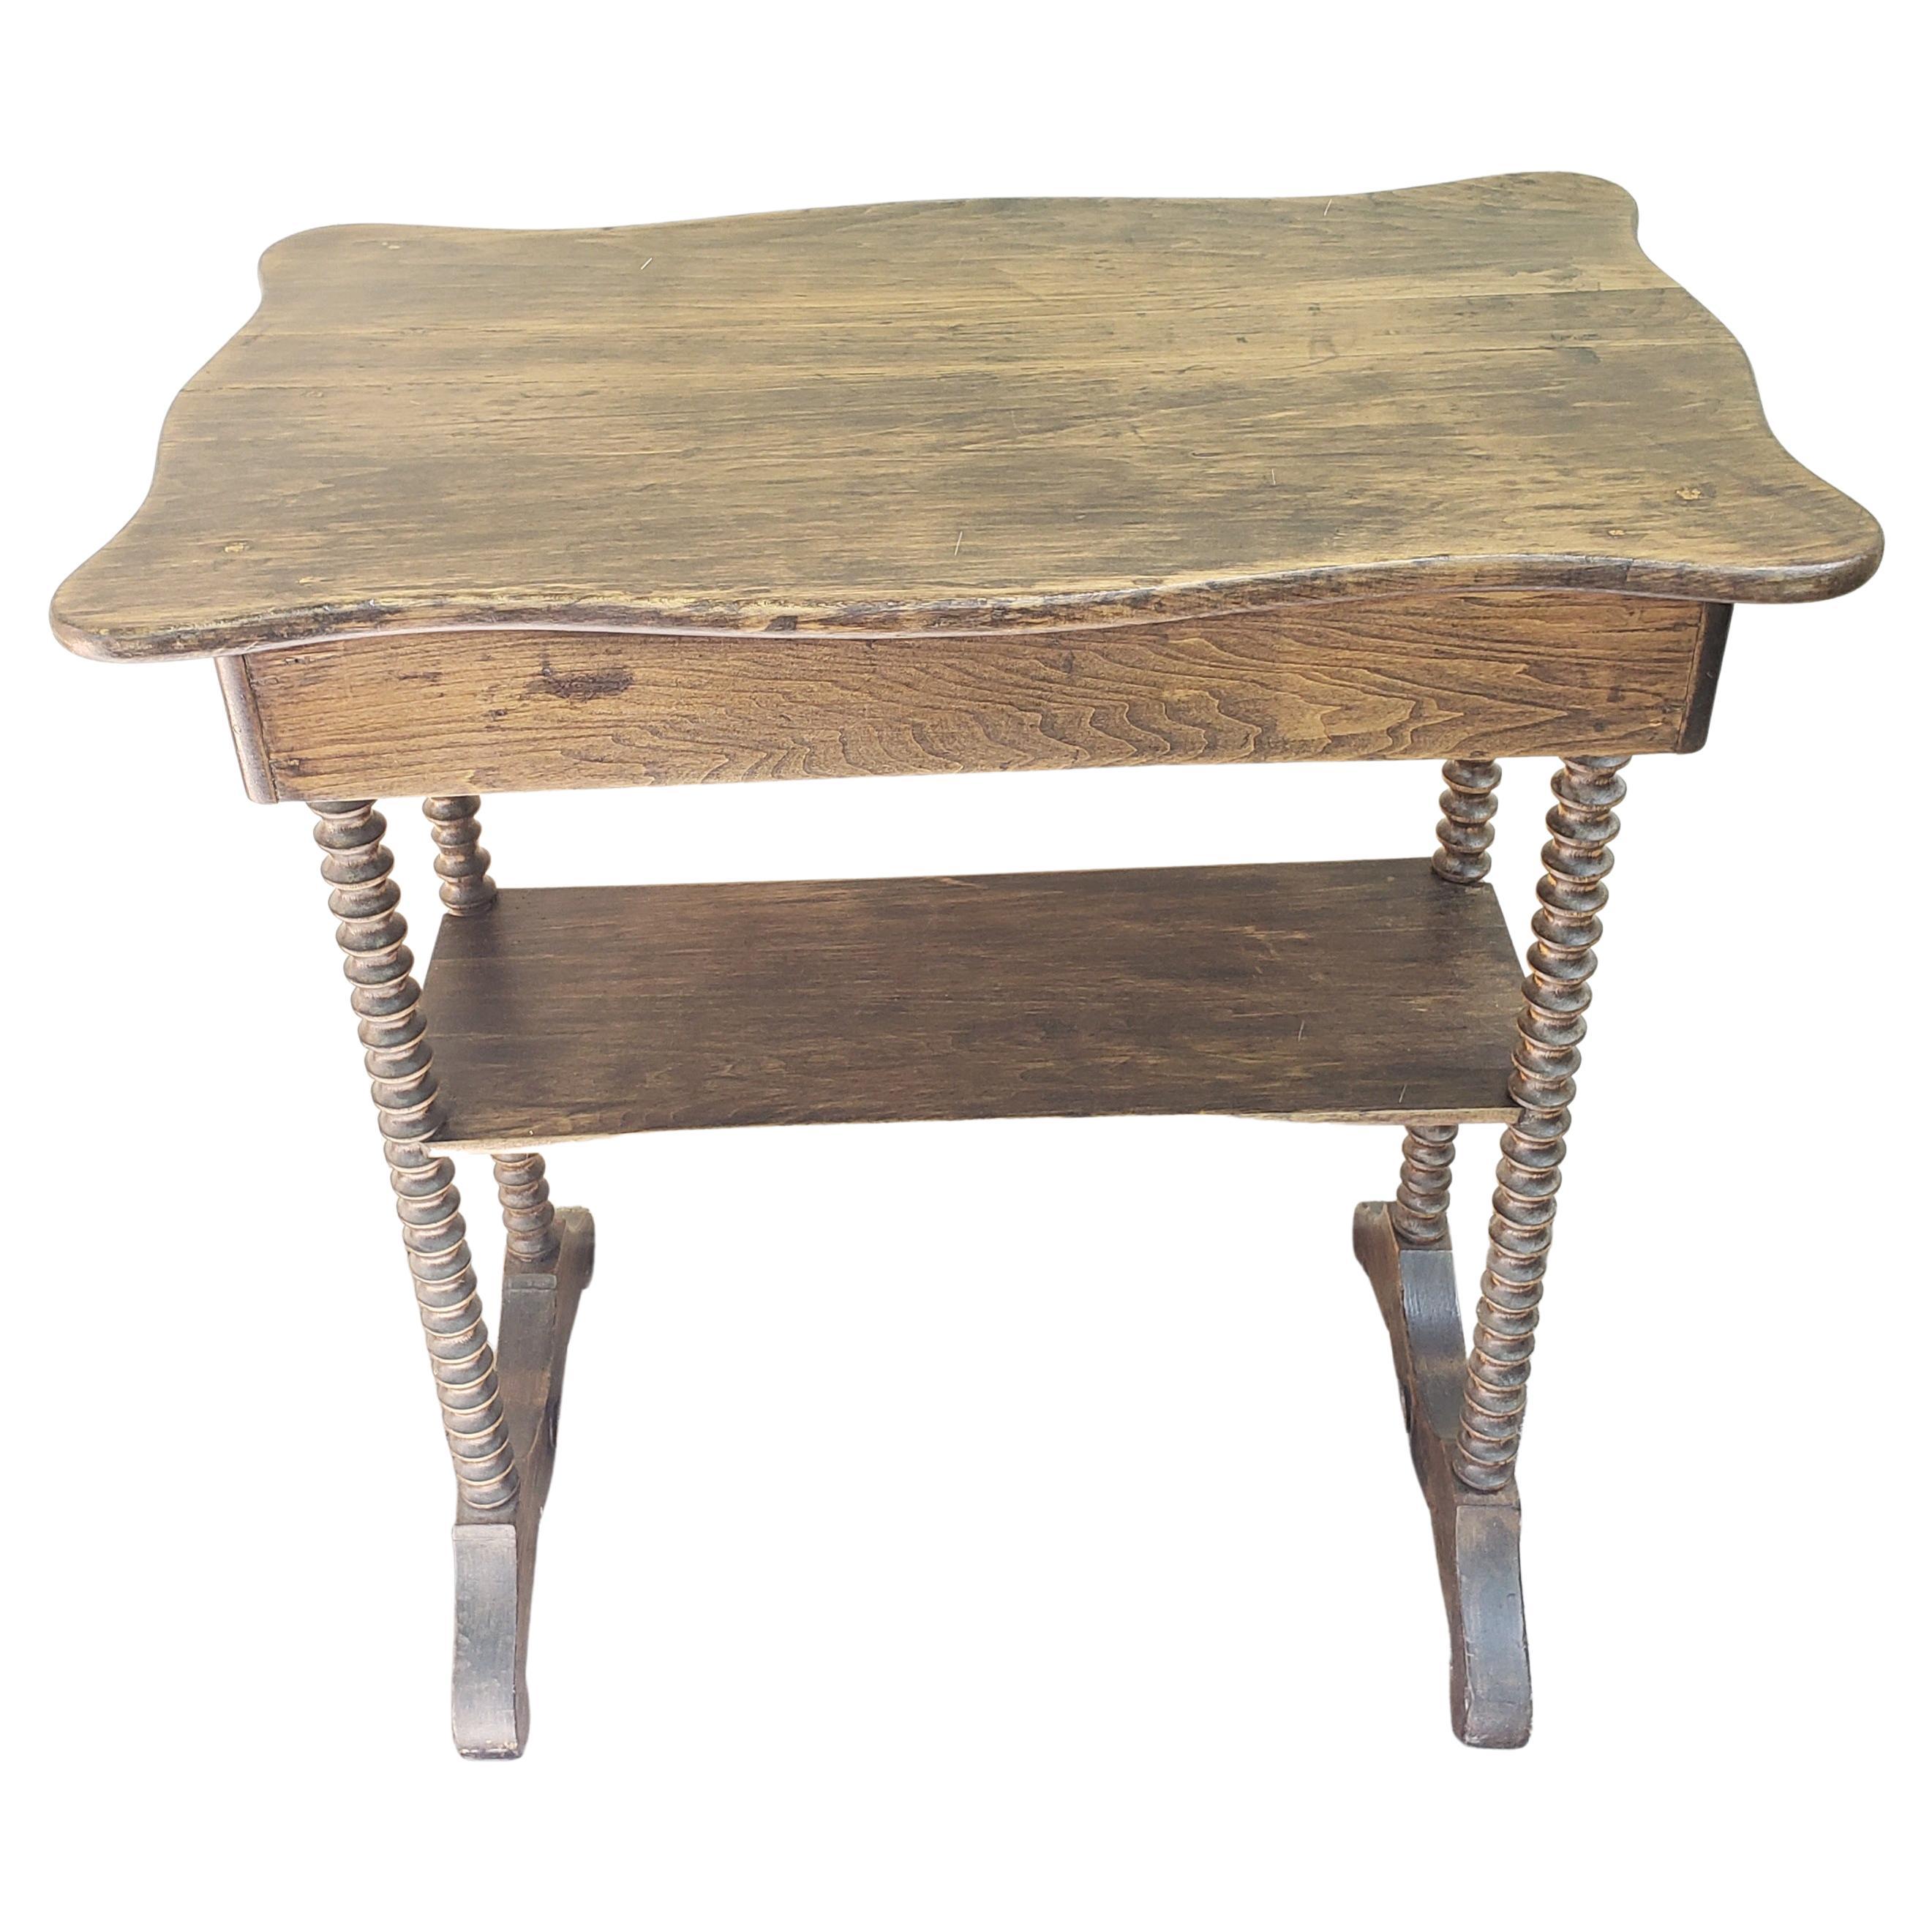 A Vintage American colonial Two tier bobbin legs table in good condition. Measures 36